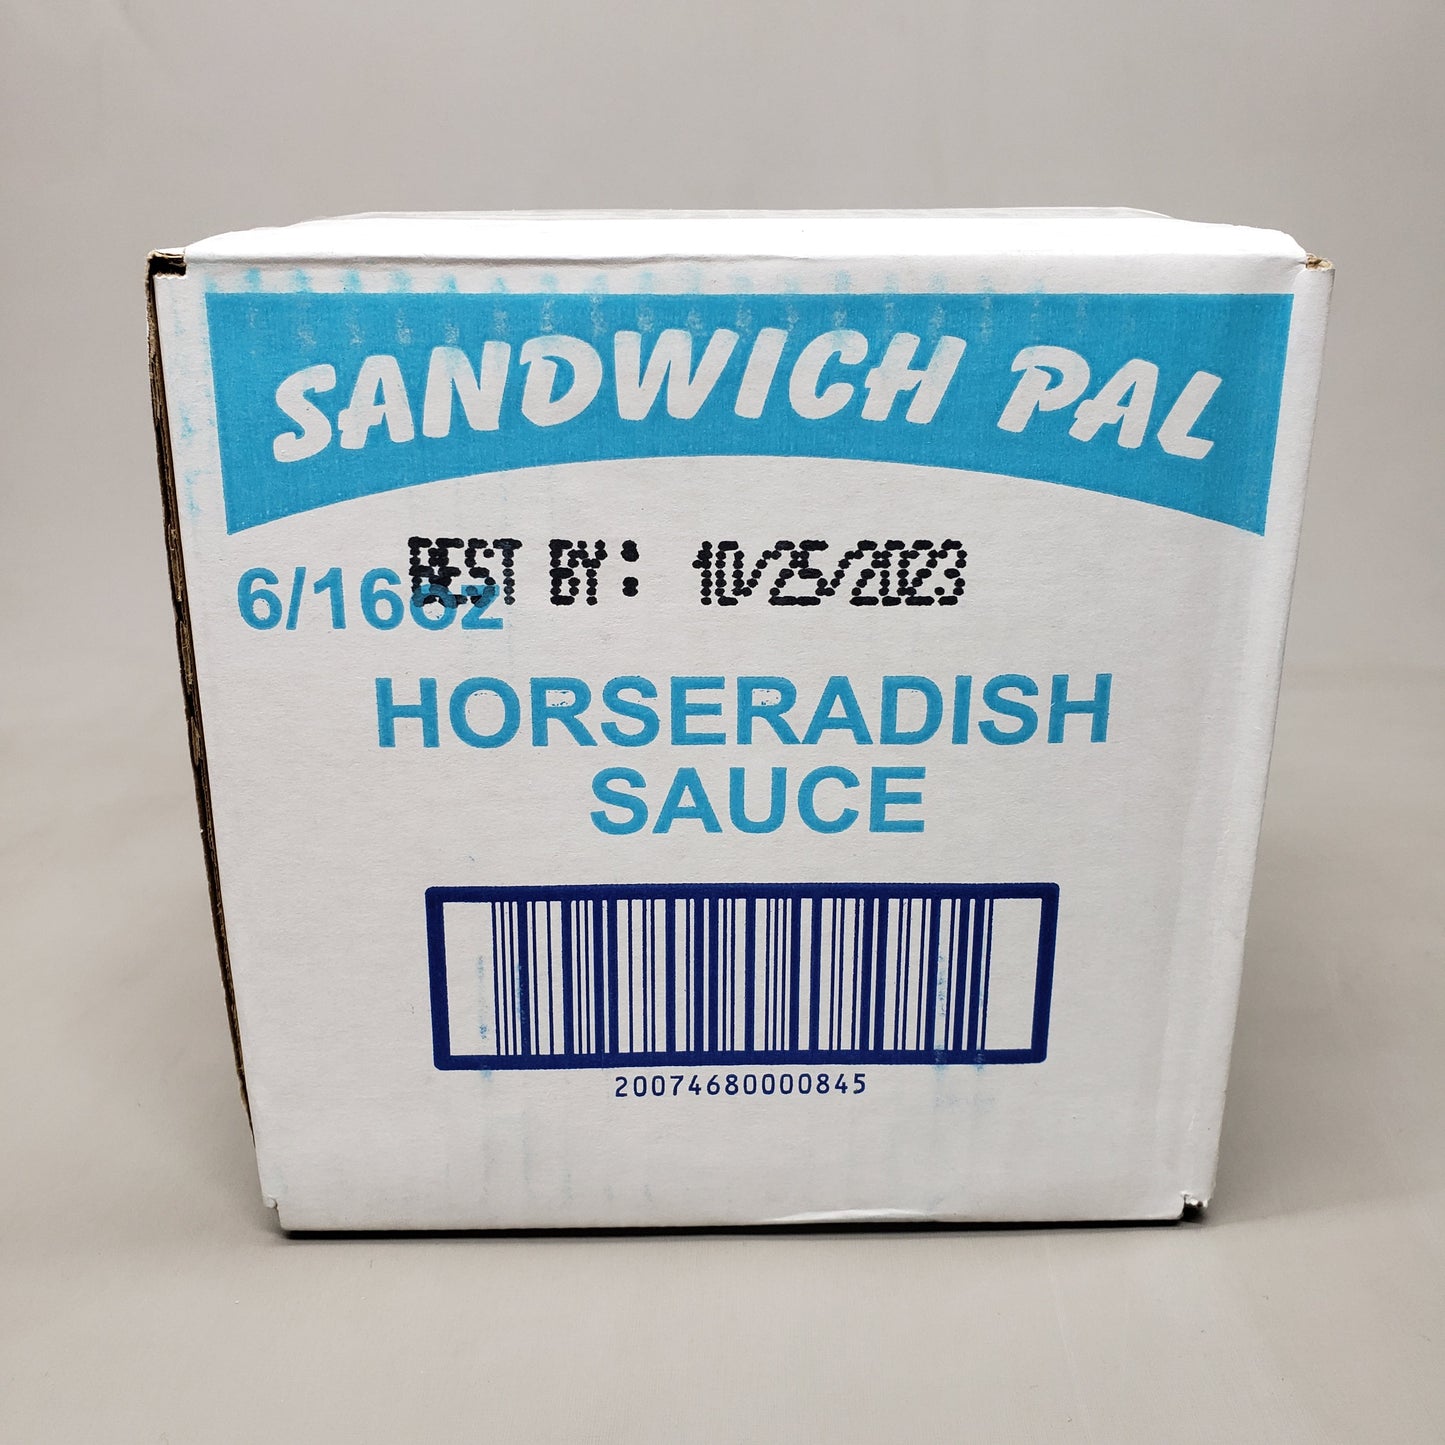 ZA@ WOEBER'S (24 PACK) Sandwich Pal Horseradish Sauce 6/16 oz 10/23